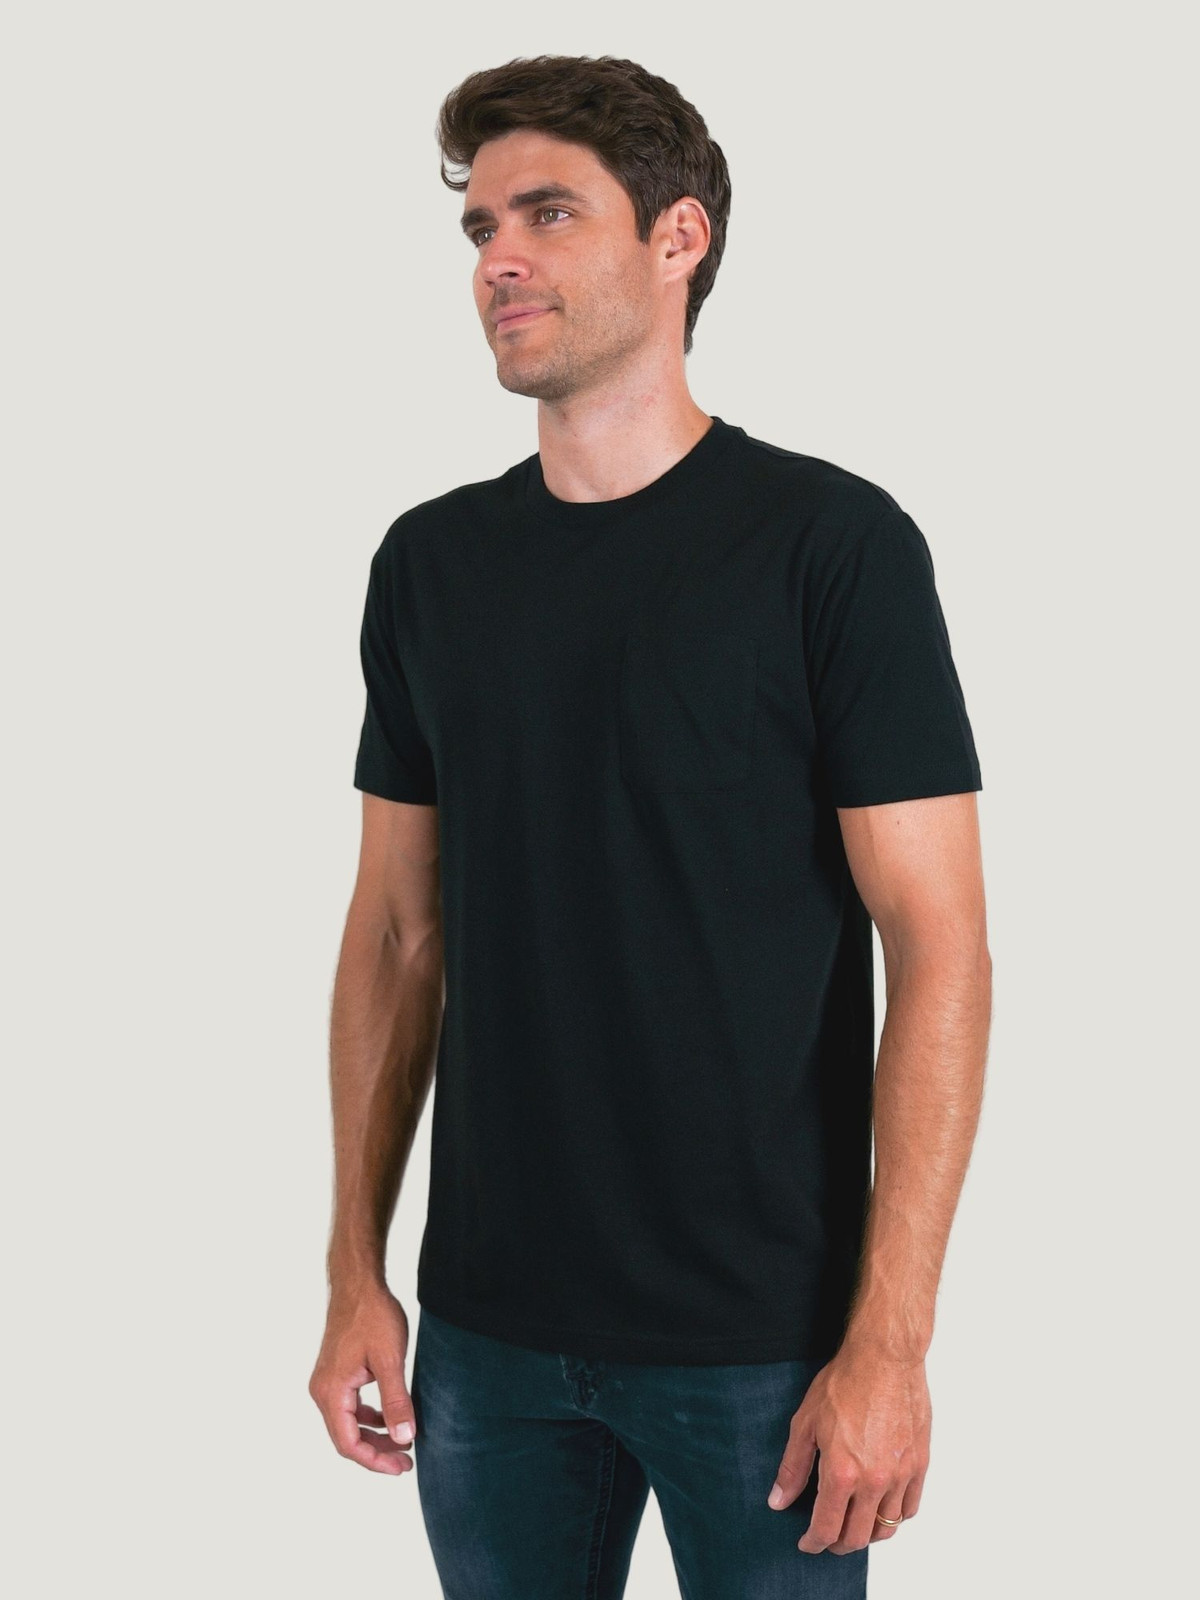 Black Pocket T-Shirt For Men | Fresh Clean Tees